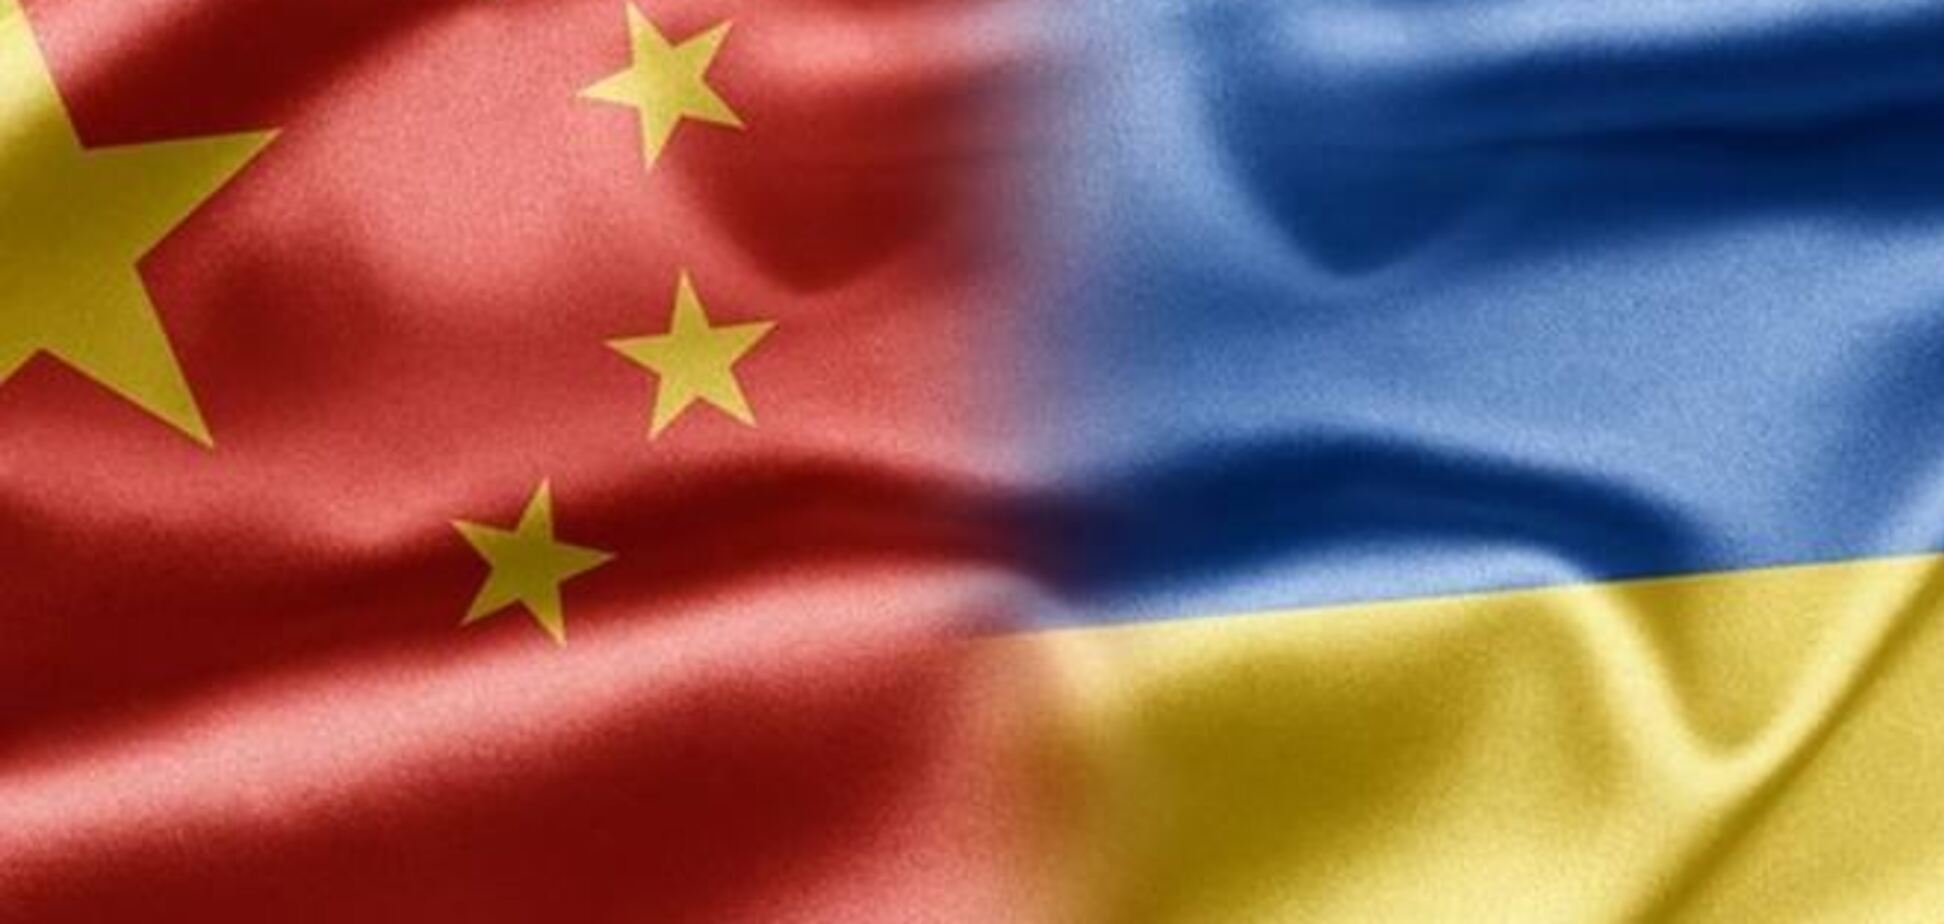 Присяжнюк: Украина активизирует реализацию украинско-китайских инвестпроектов